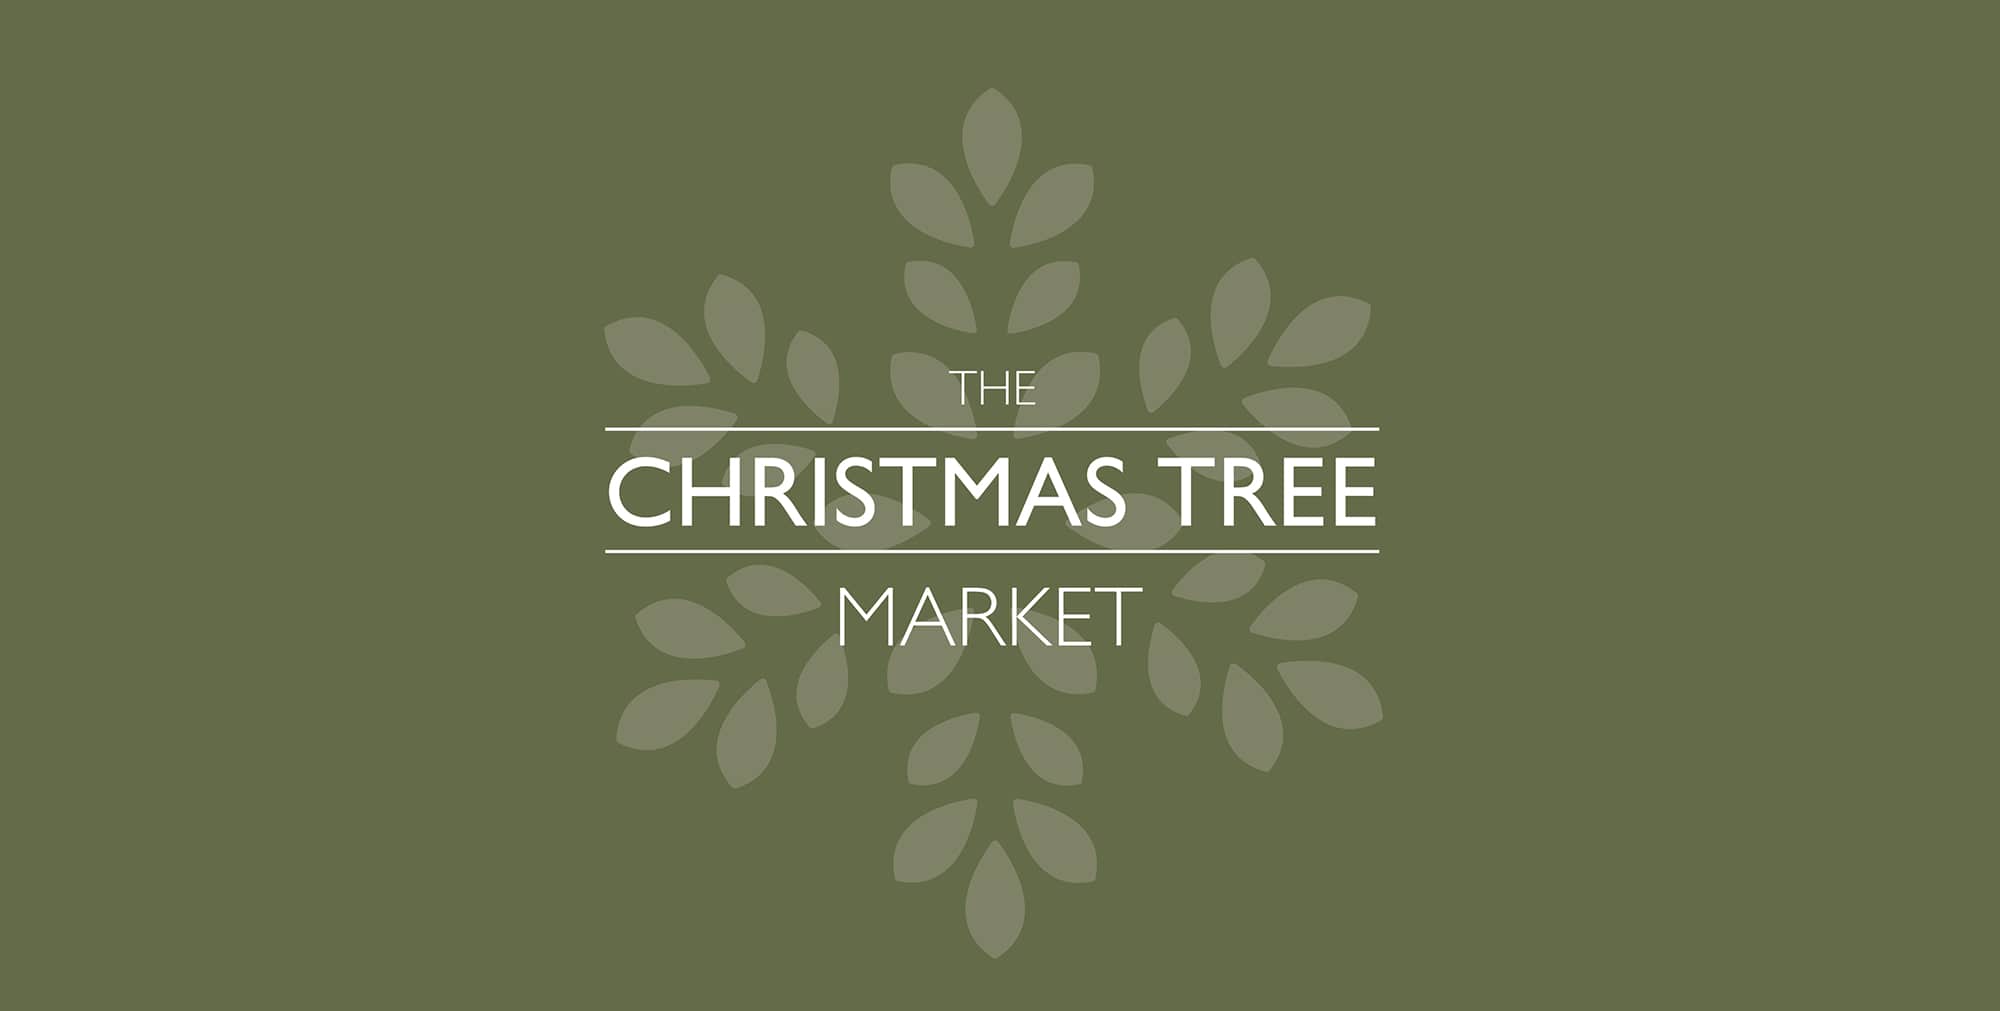 The Christmas Tree Market